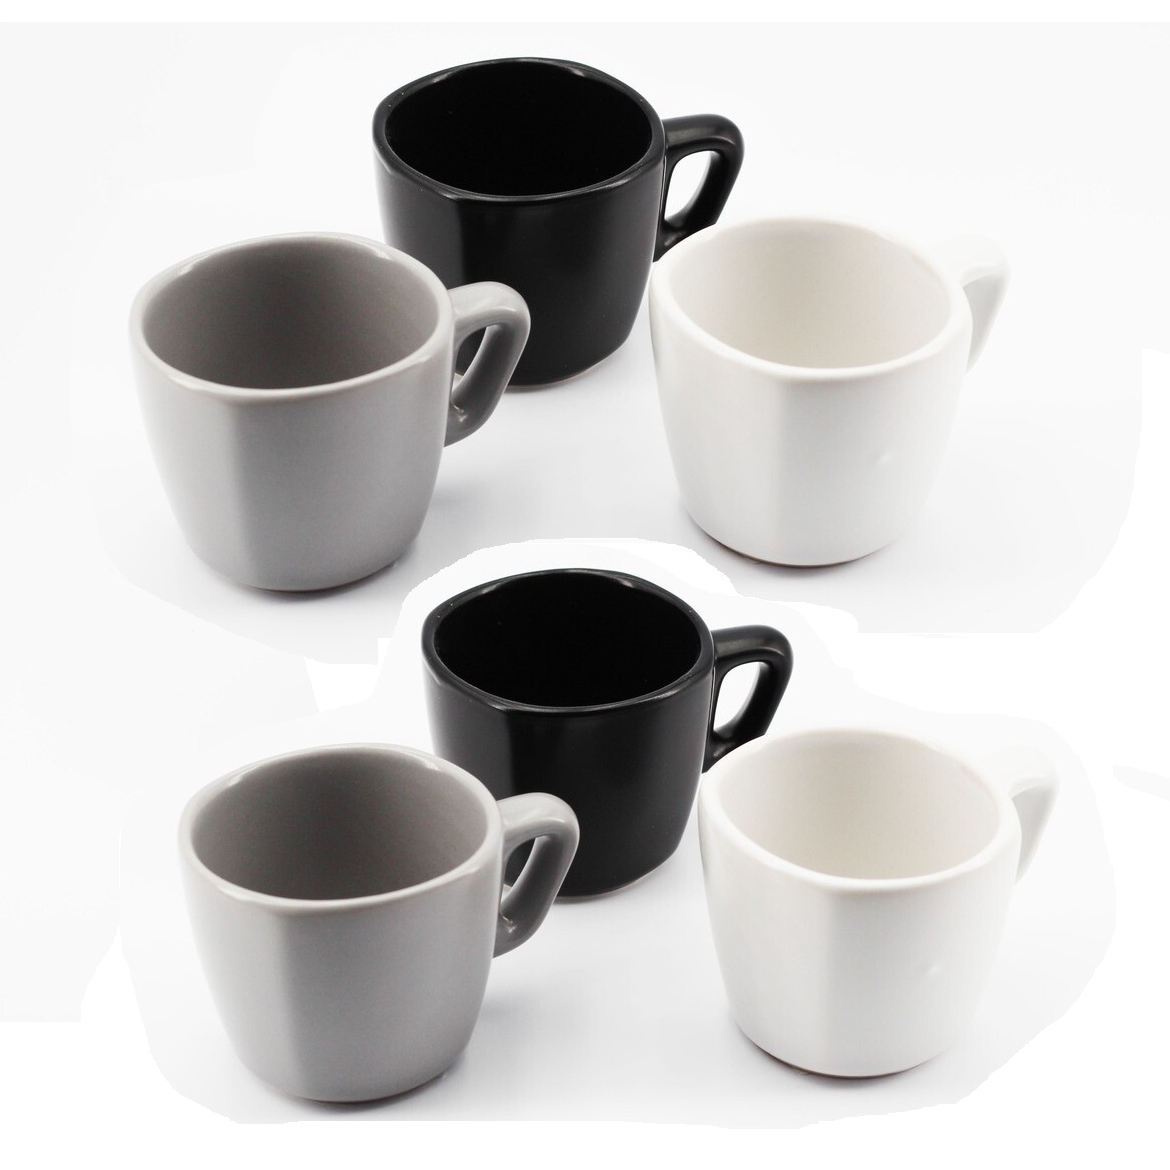 Tazzine caffe' Eclipse bianco nero grigio ml.70 ceramica set 6 pezzi -  Excelsa - Af Interni Shop